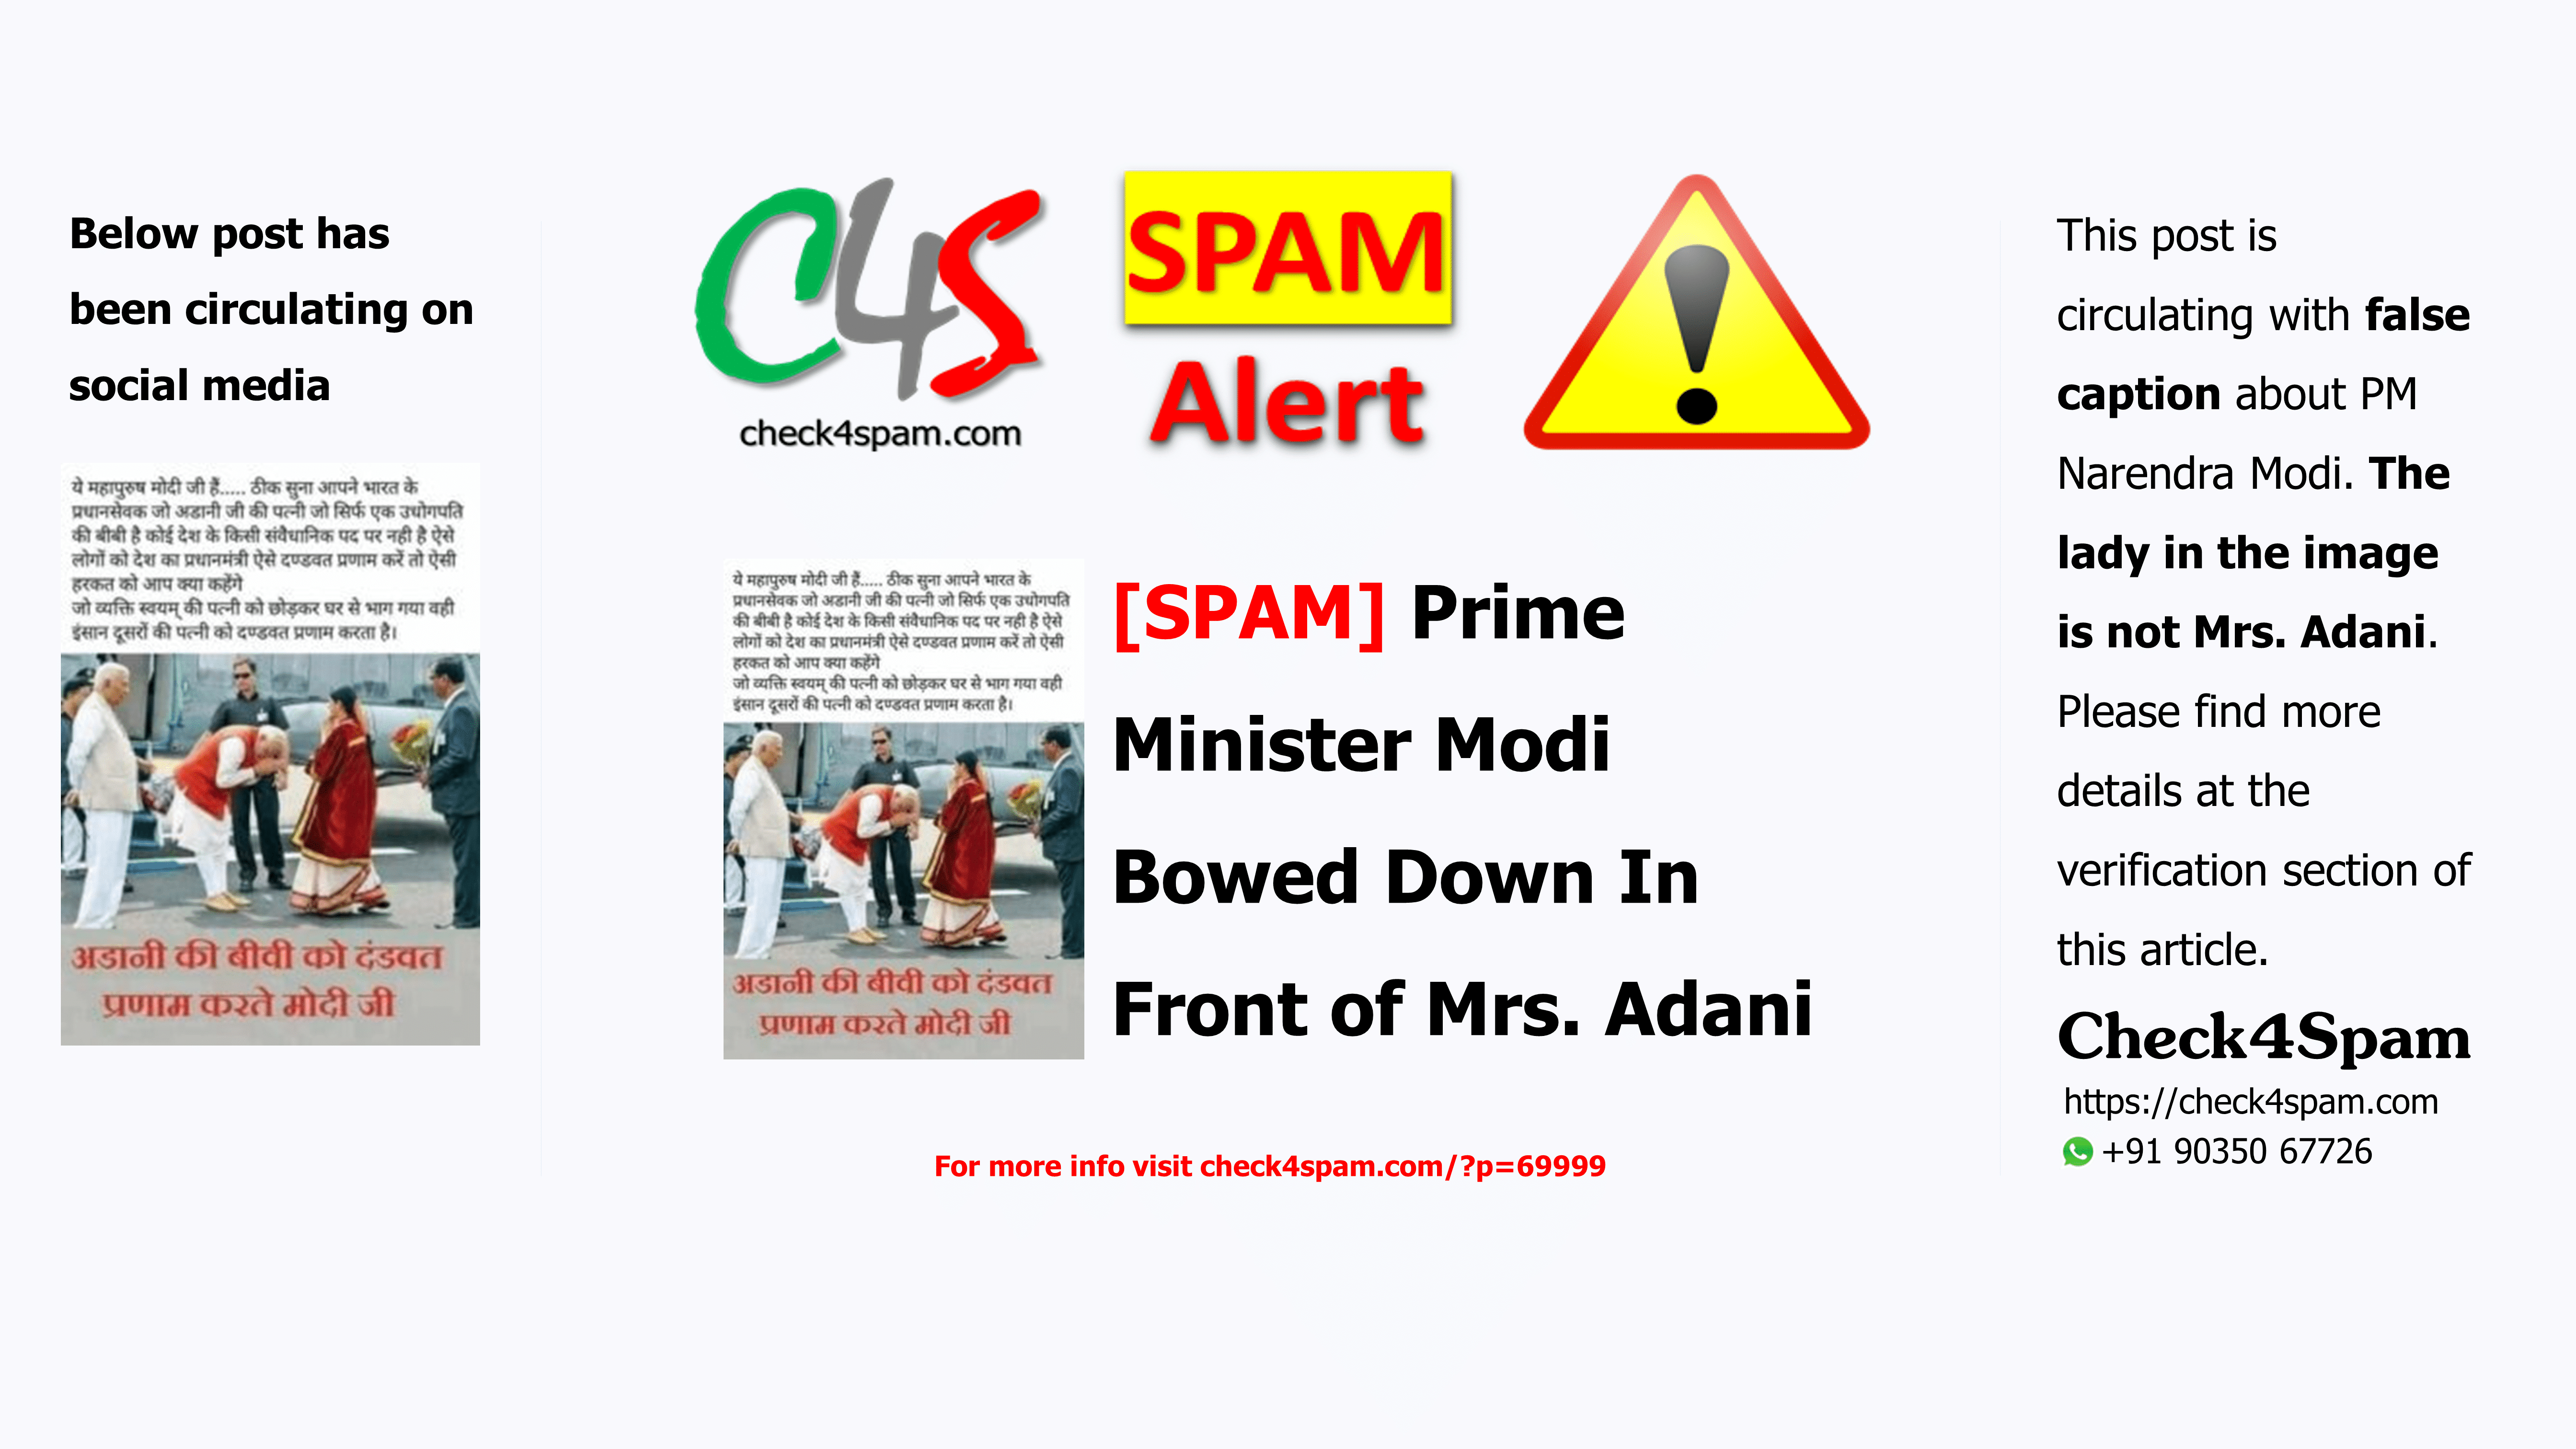 [SPAM] Prime Minister Narendra Modi Bowed Down In Front of Mrs Adani